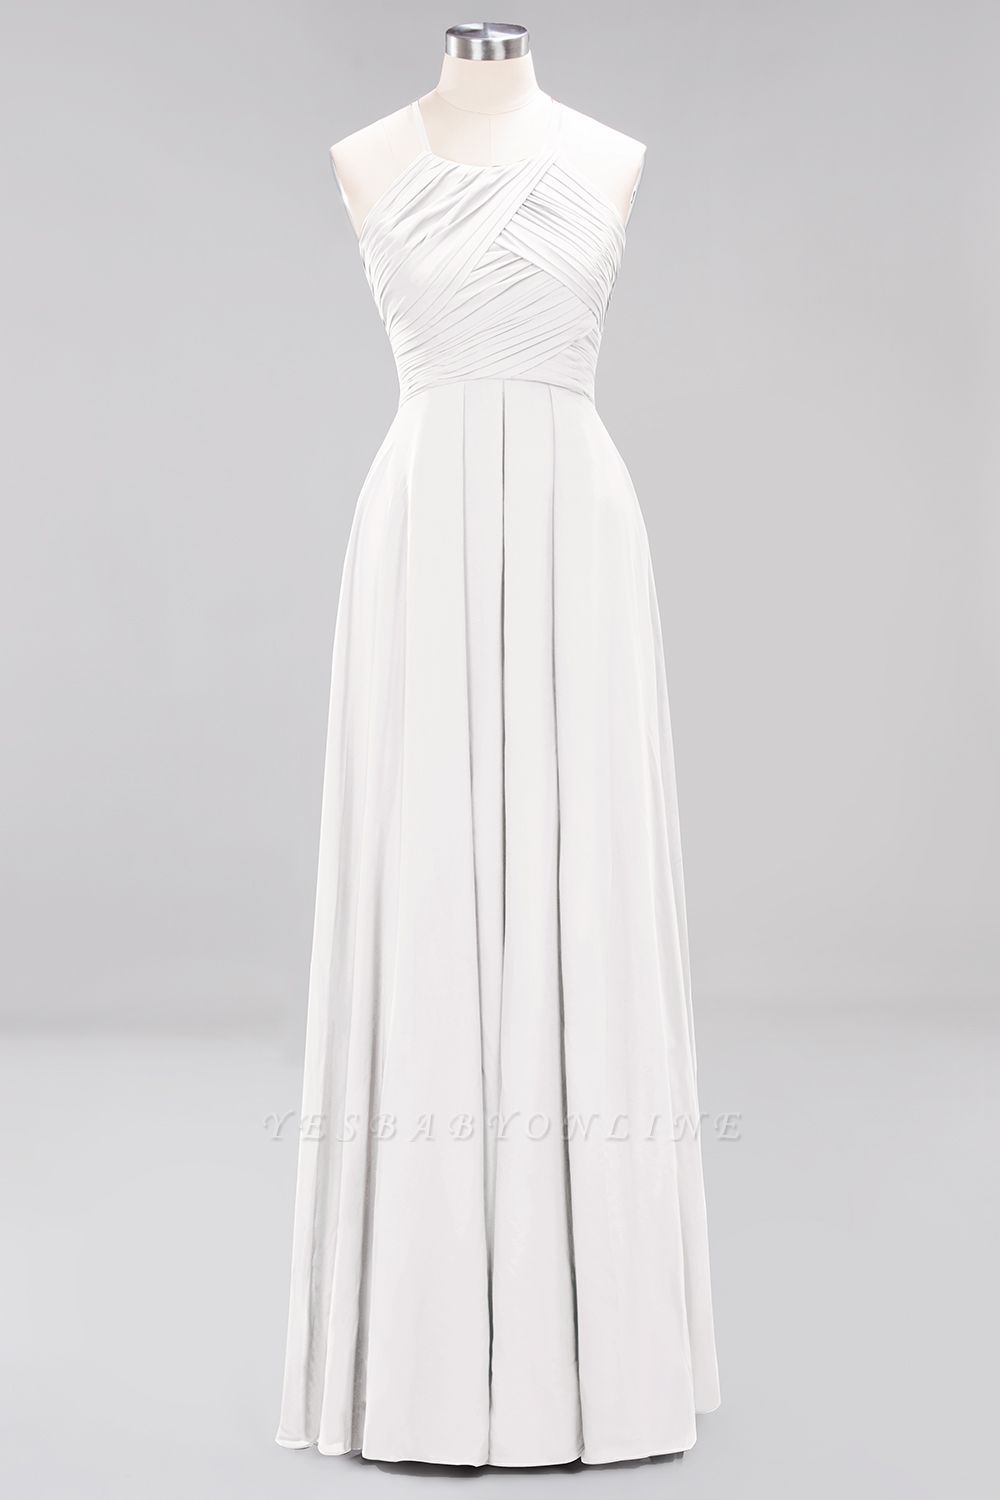 A-Line  Halter Ruffles Floor-Length Bridesmaid Dress